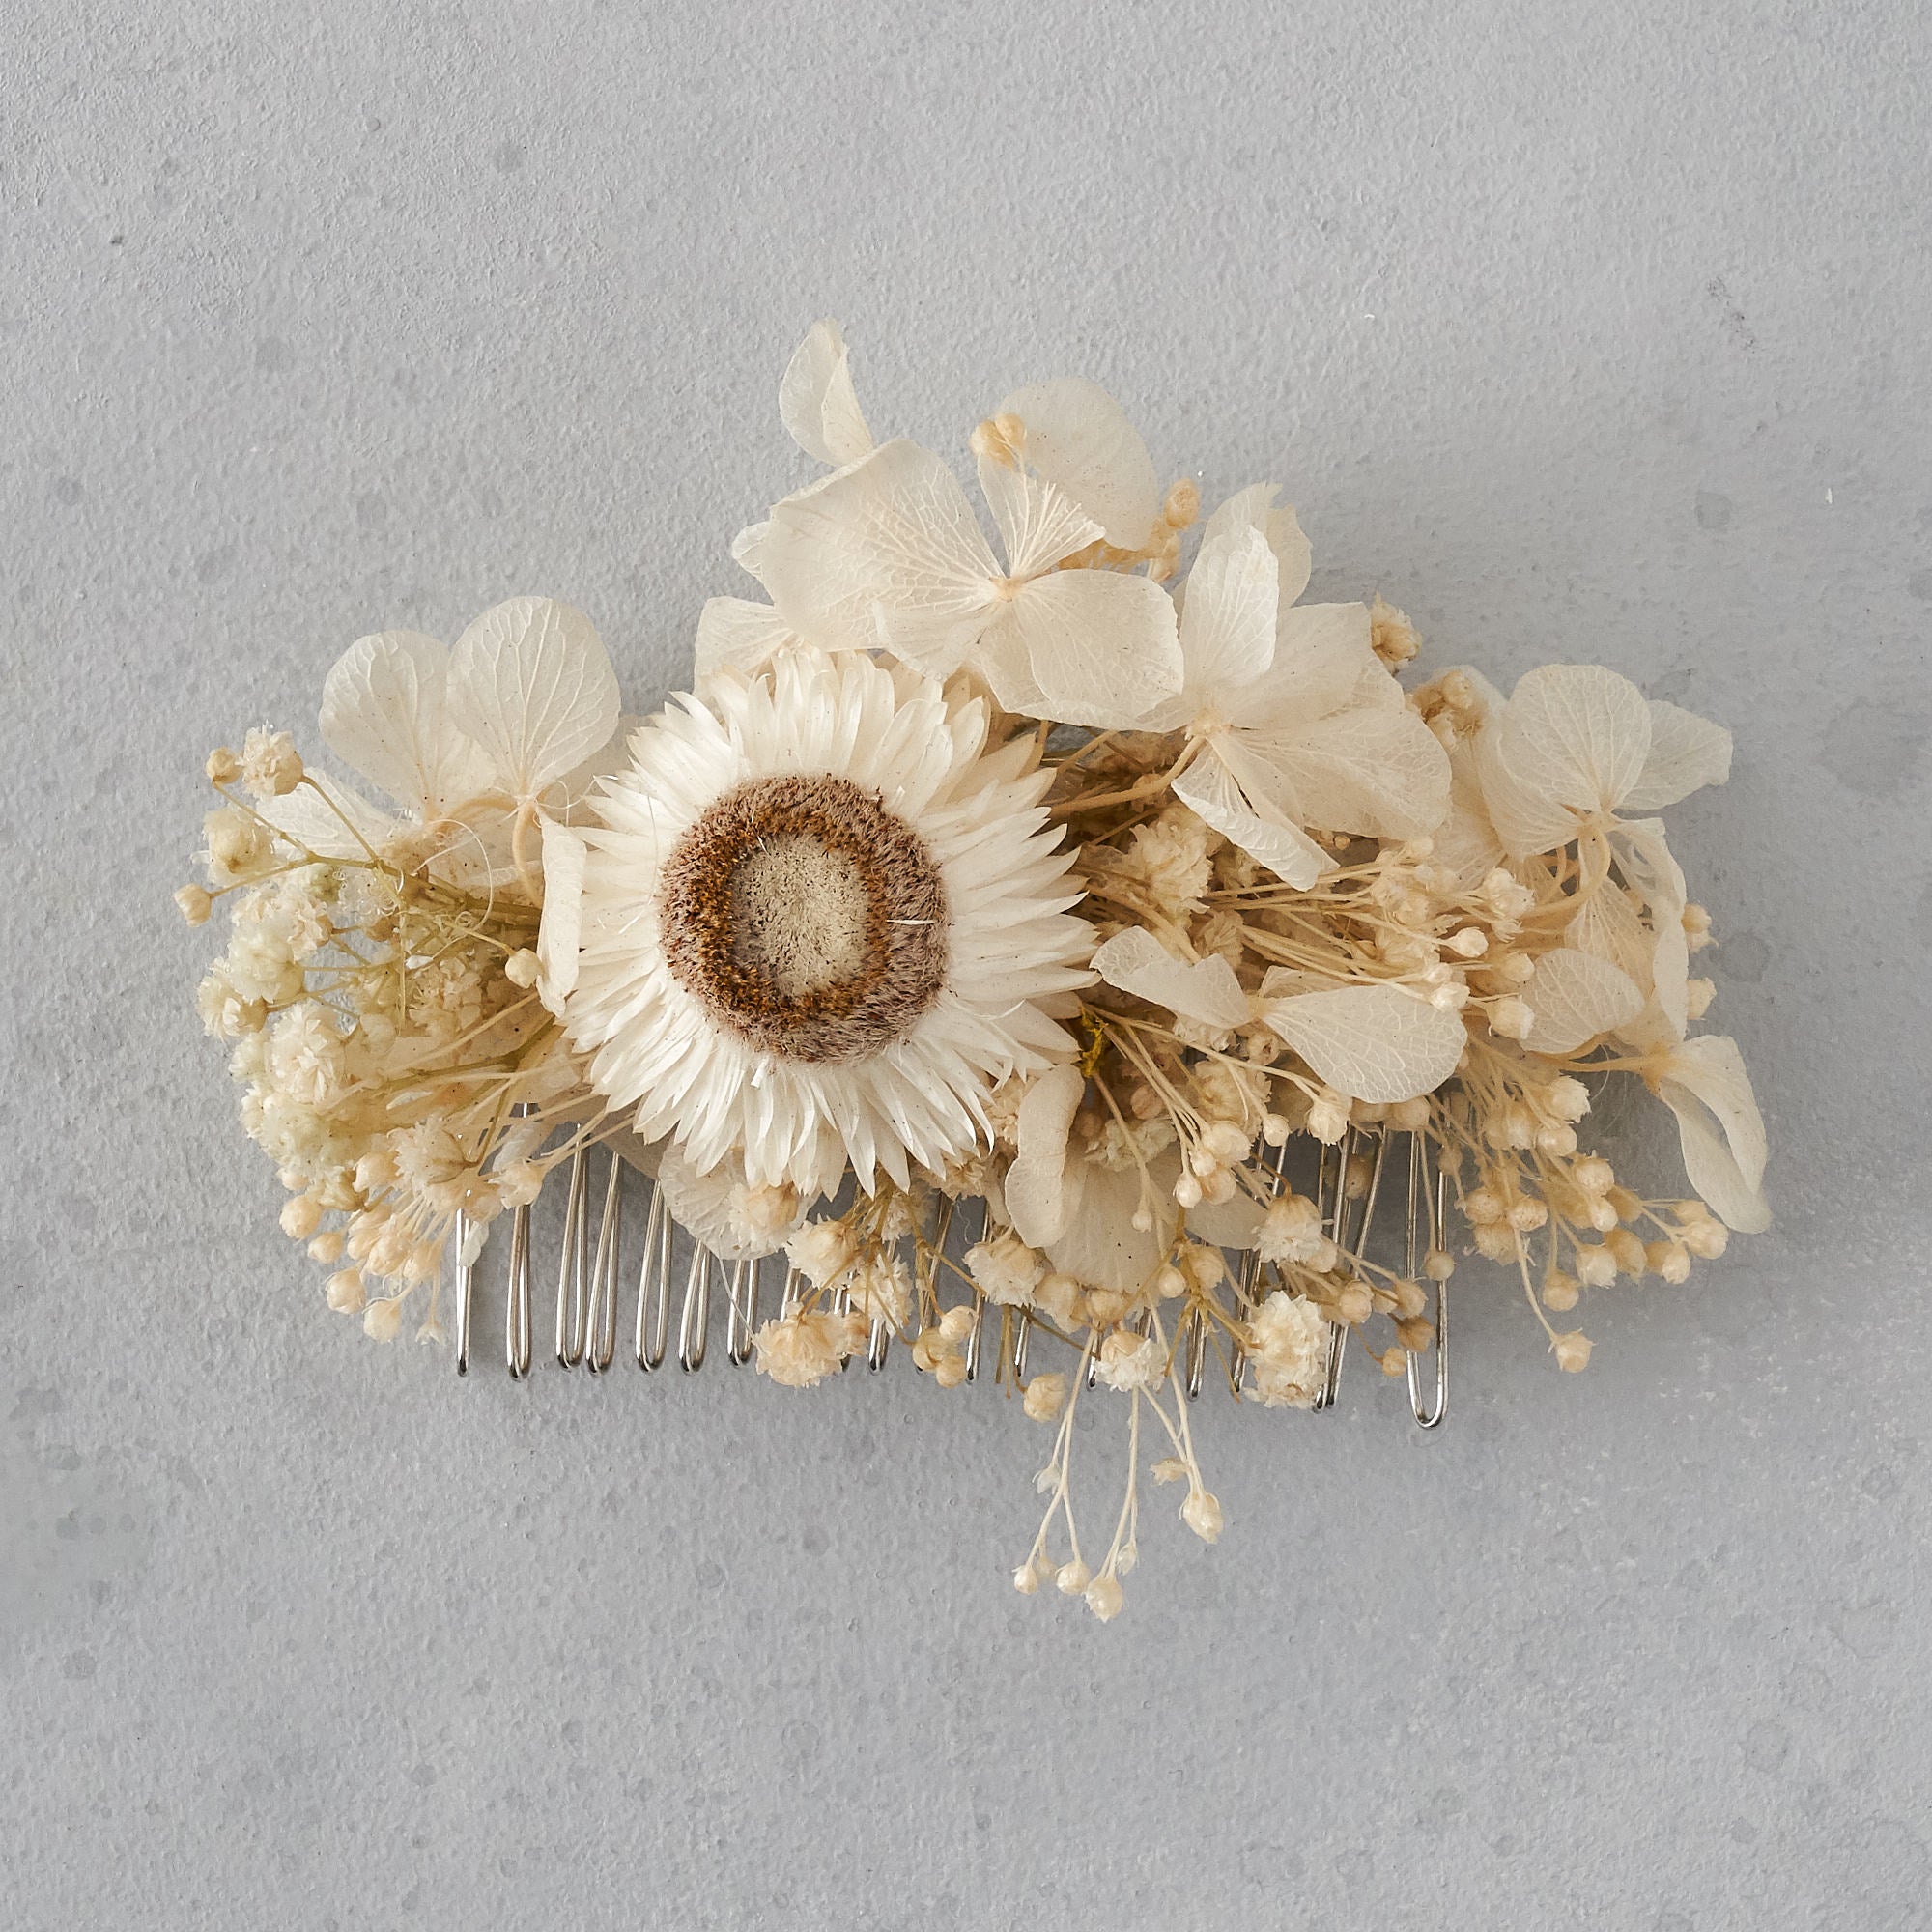 Dried flower hair comb : white